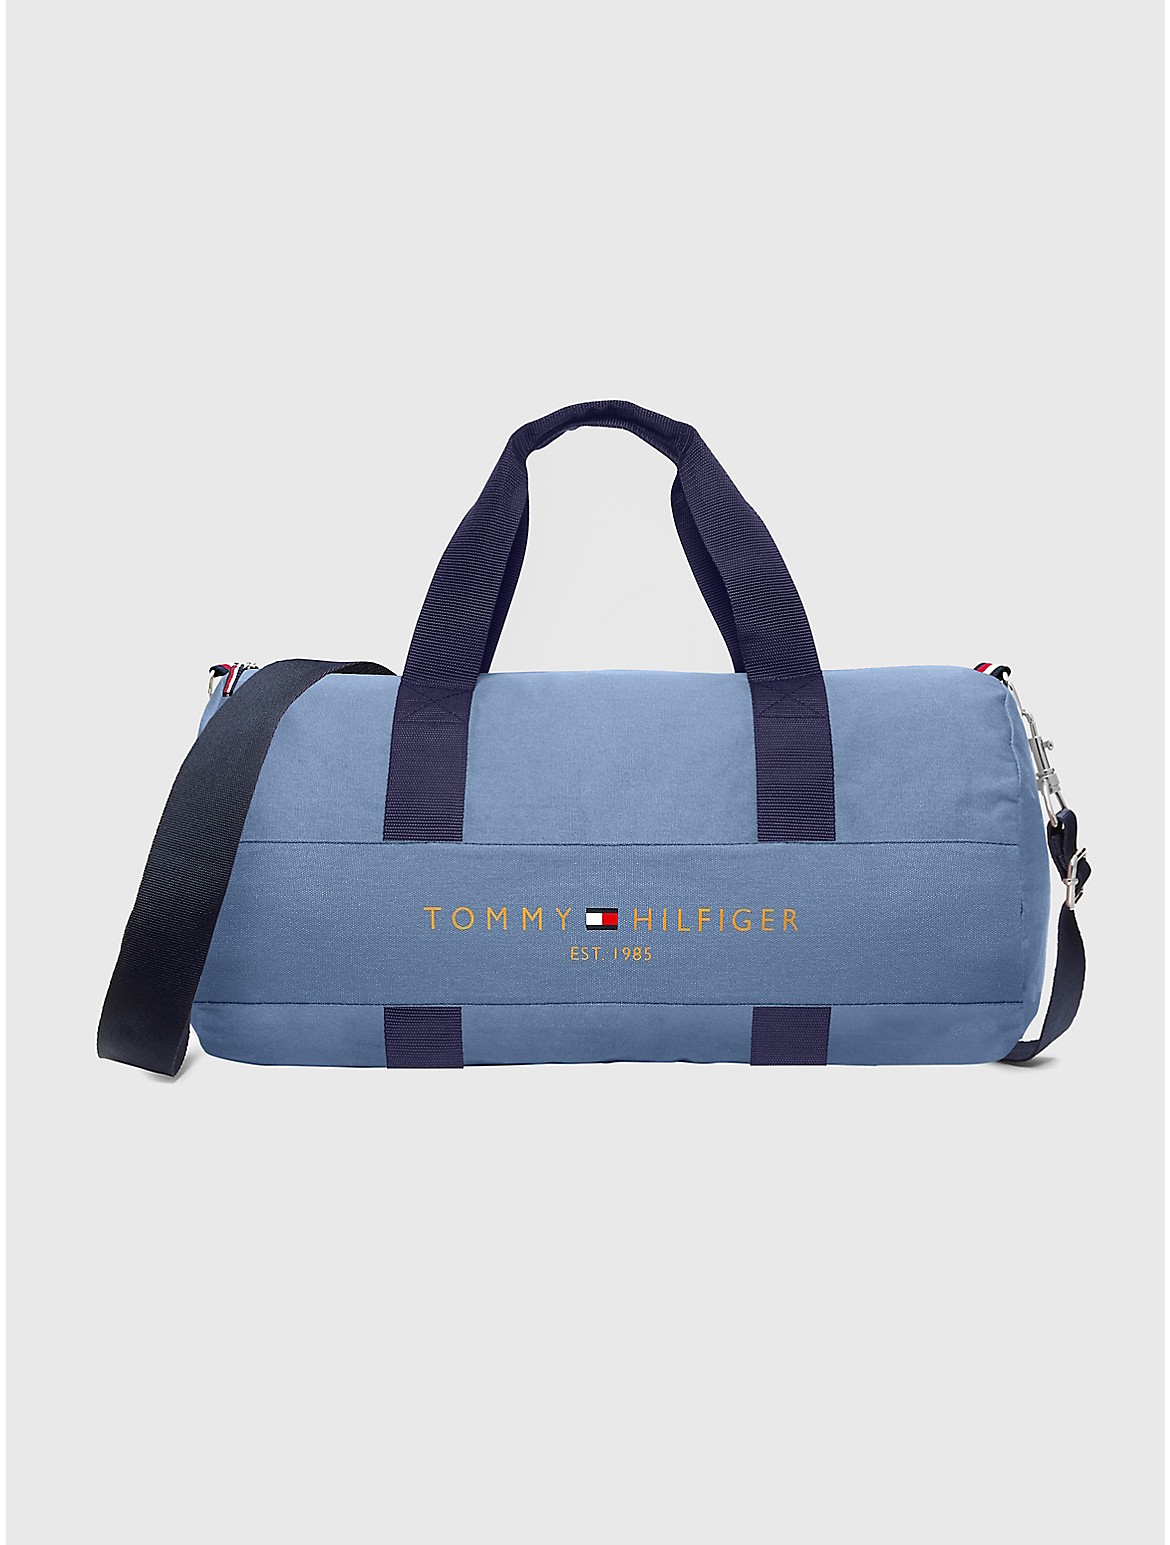 Tommy Hilfiger Logo Duffle Bag - Blue